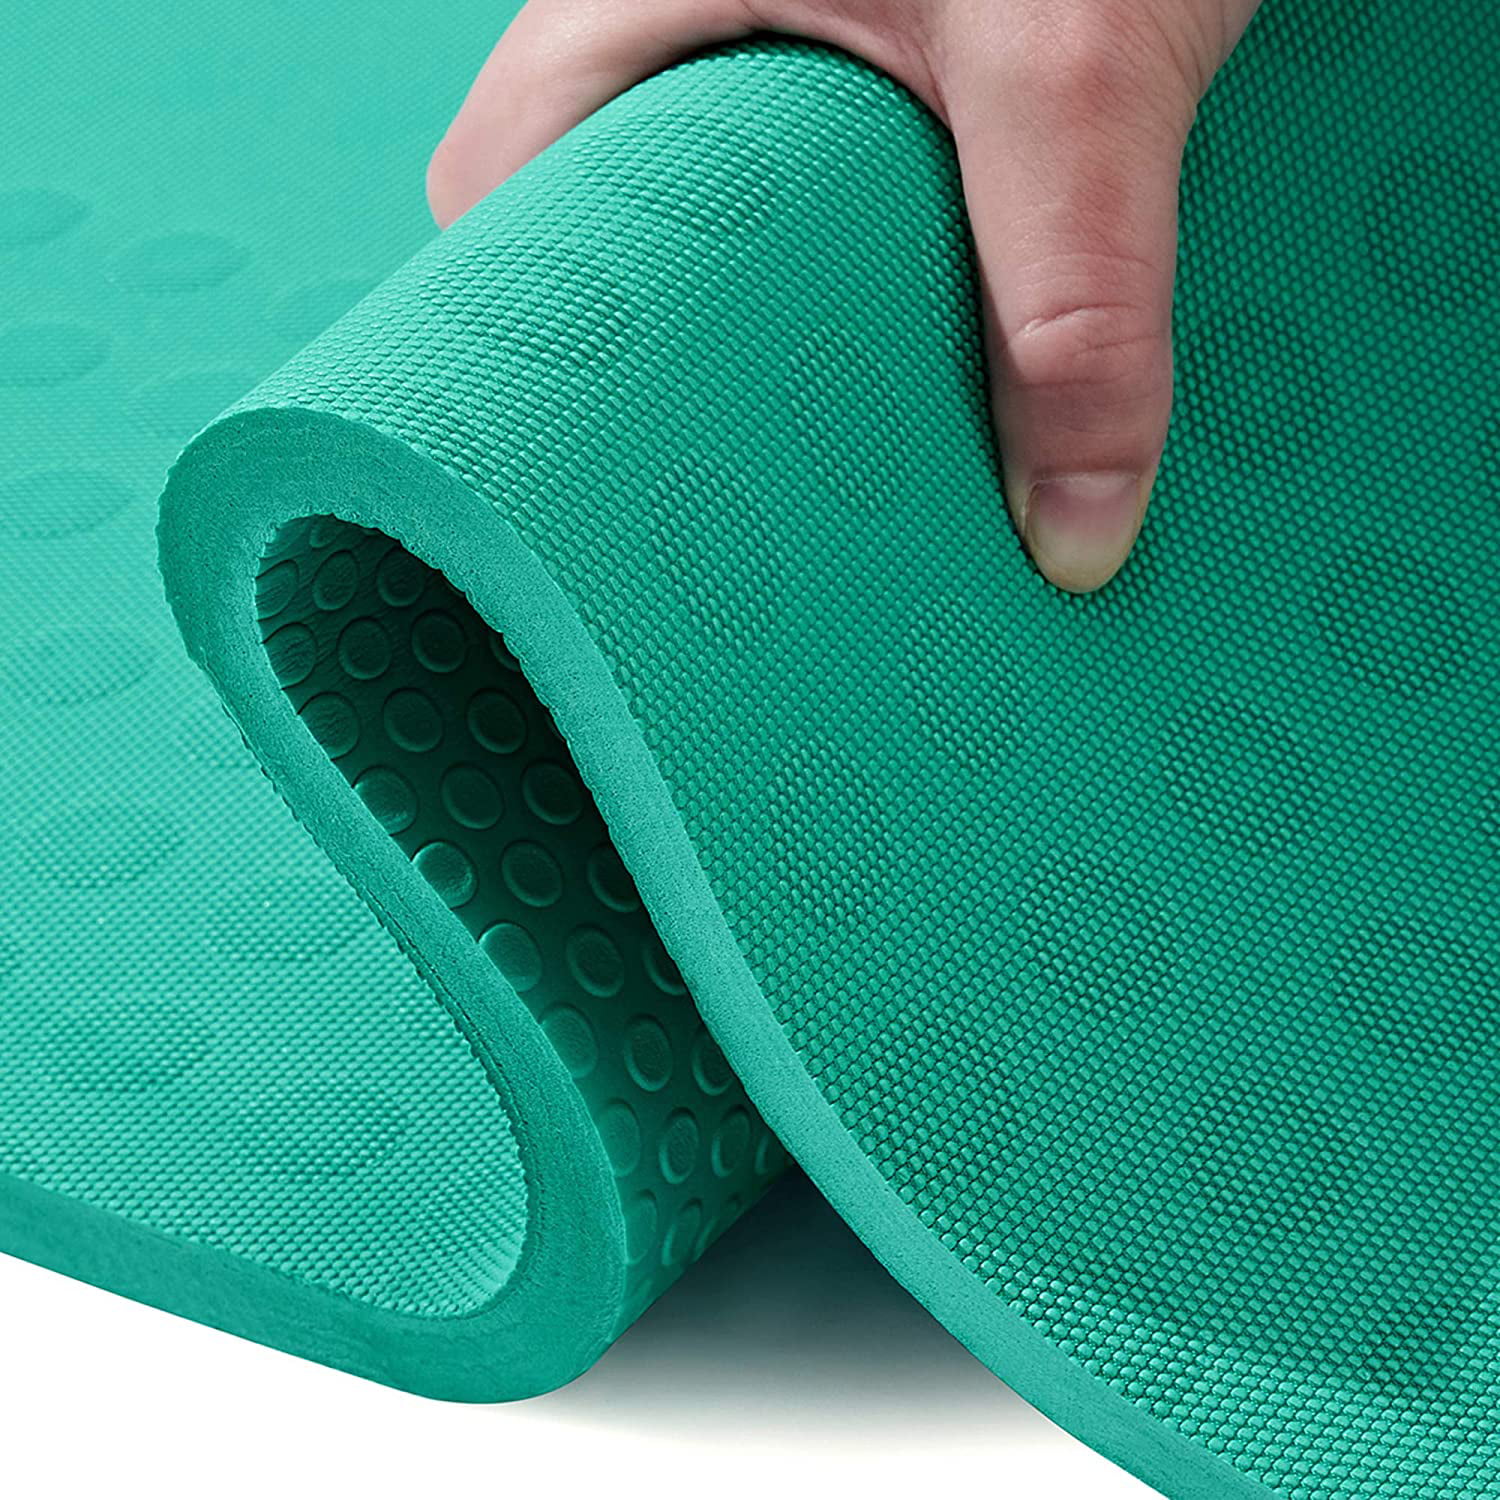 Yoga World Alignment Yoga Mat Non-Slip & Anti-Skid TPE Rubber Underside Soft 